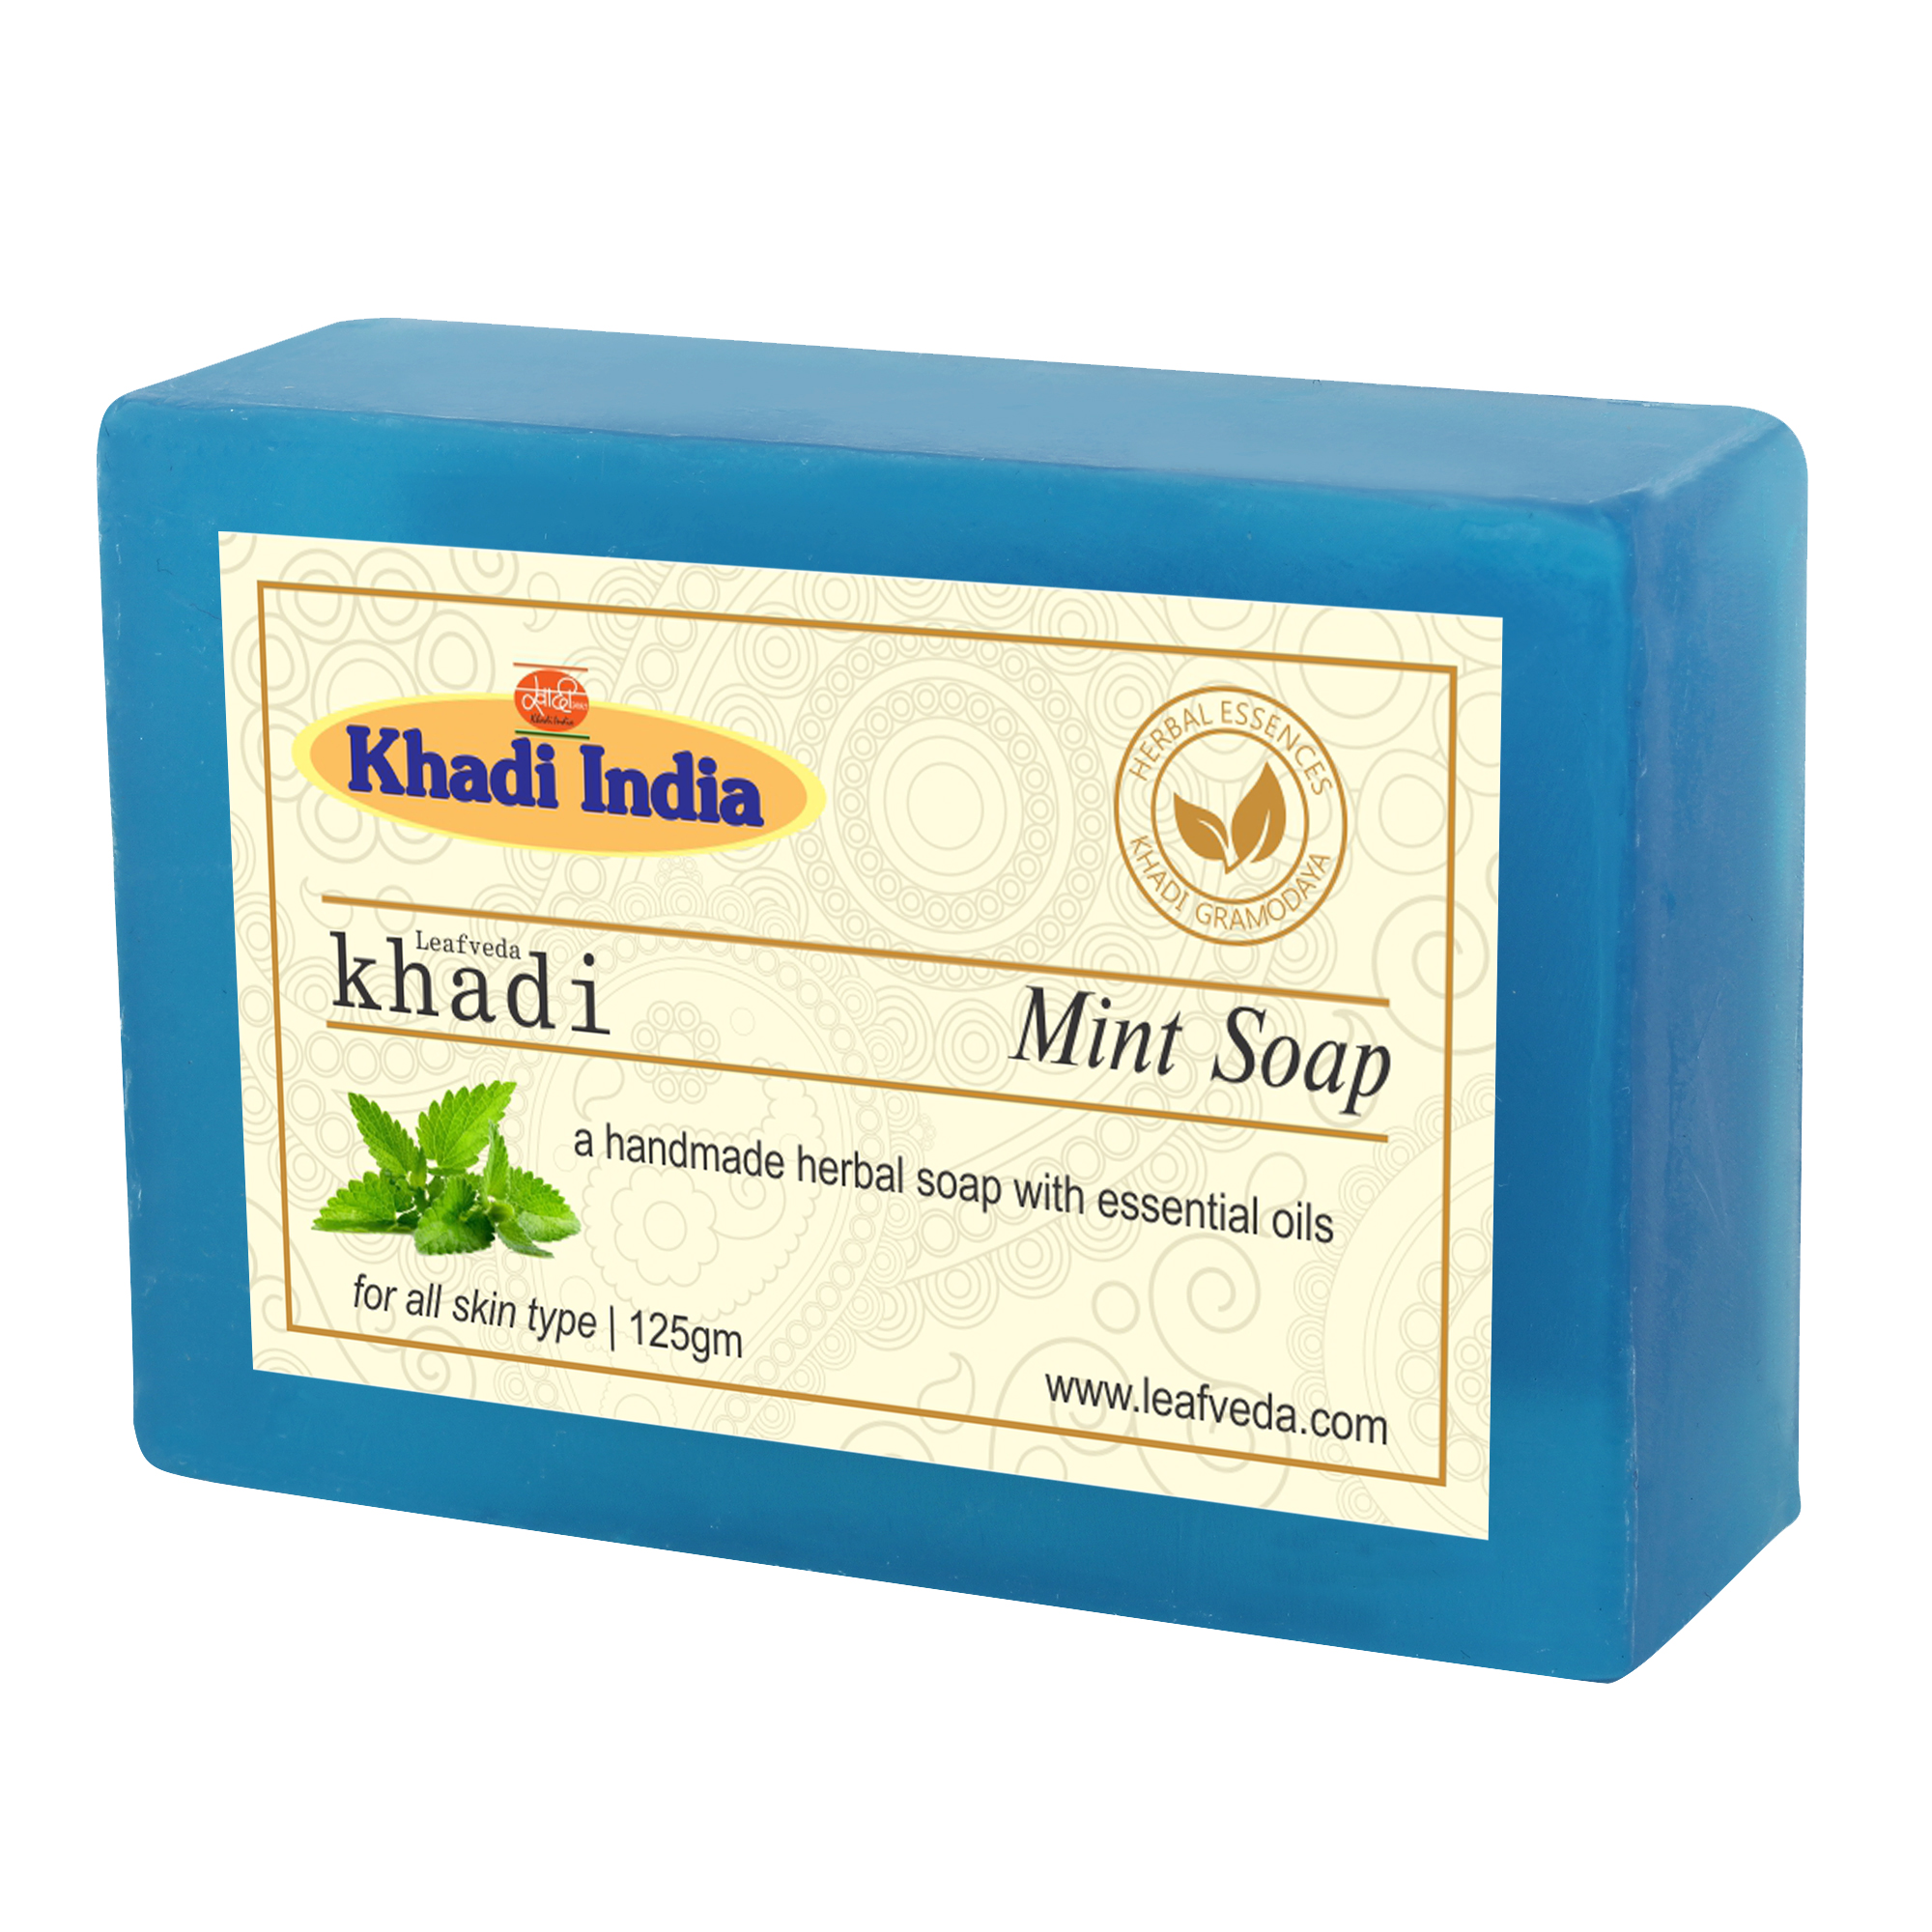 Buy Khadi Leafveda Mint Soap at Best Price Online